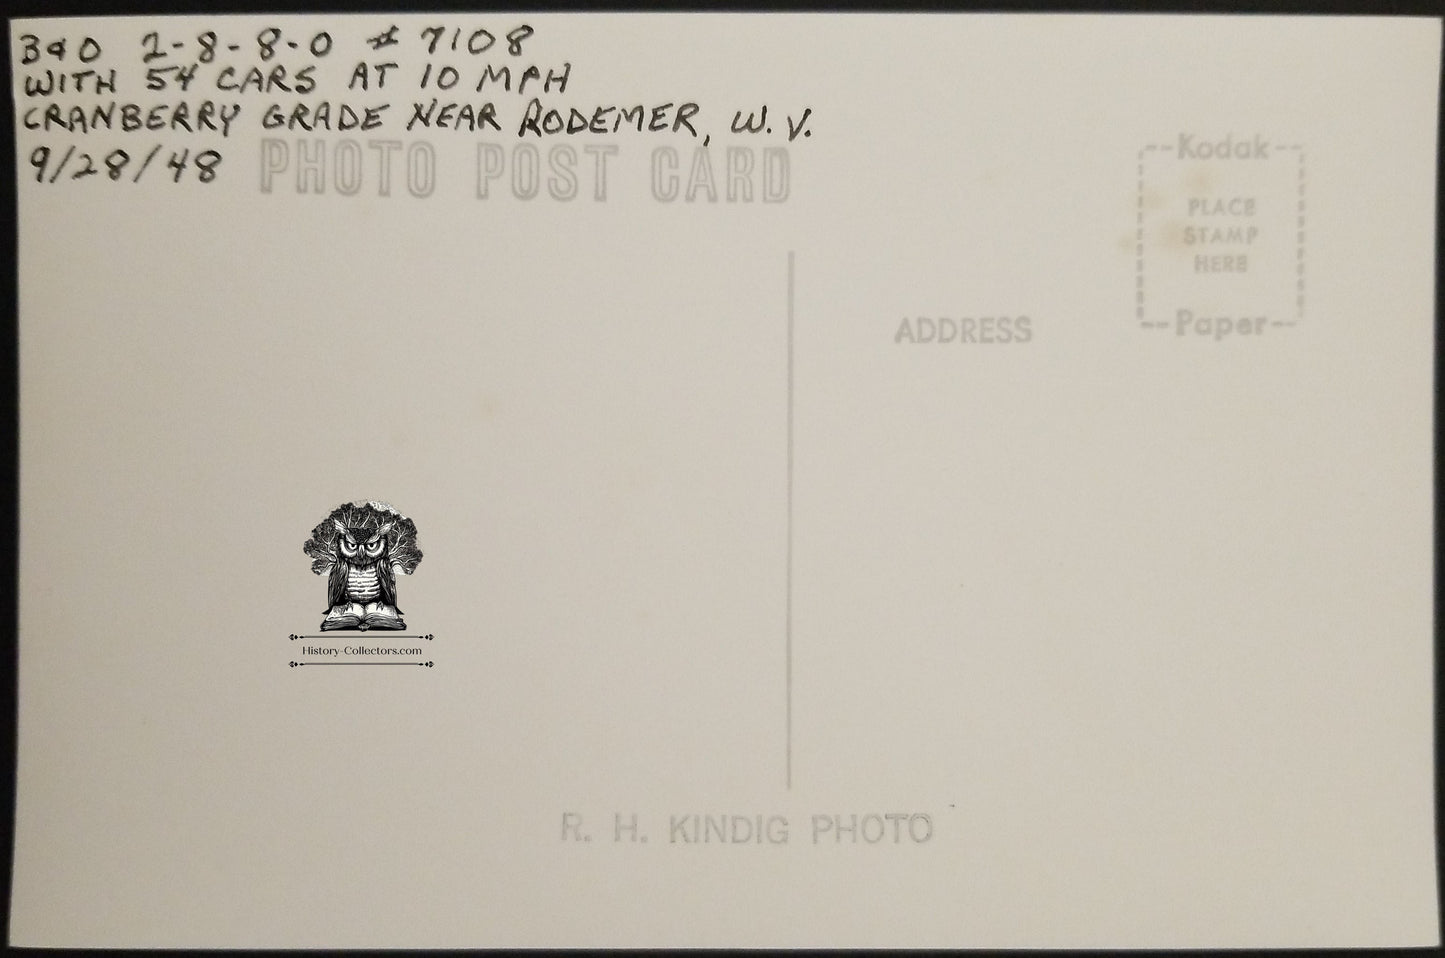 1948 RPPC Picture Postcard - B&O Railroad Engine Train 7108 - Cranberry Grade Rodemer West Virginia - Photographer Kindig - Kodak Stamp Box